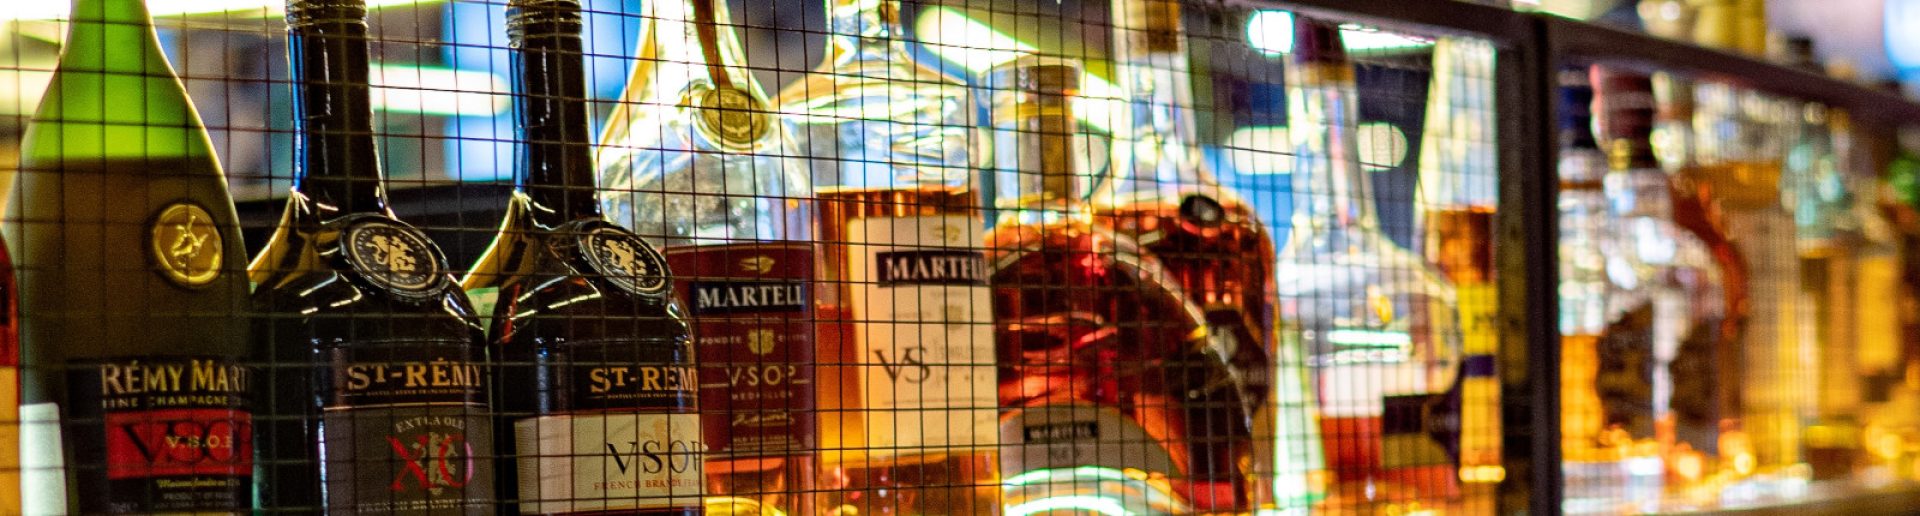 Types of Cognac: The Ultimate Guide to Understanding Cognac